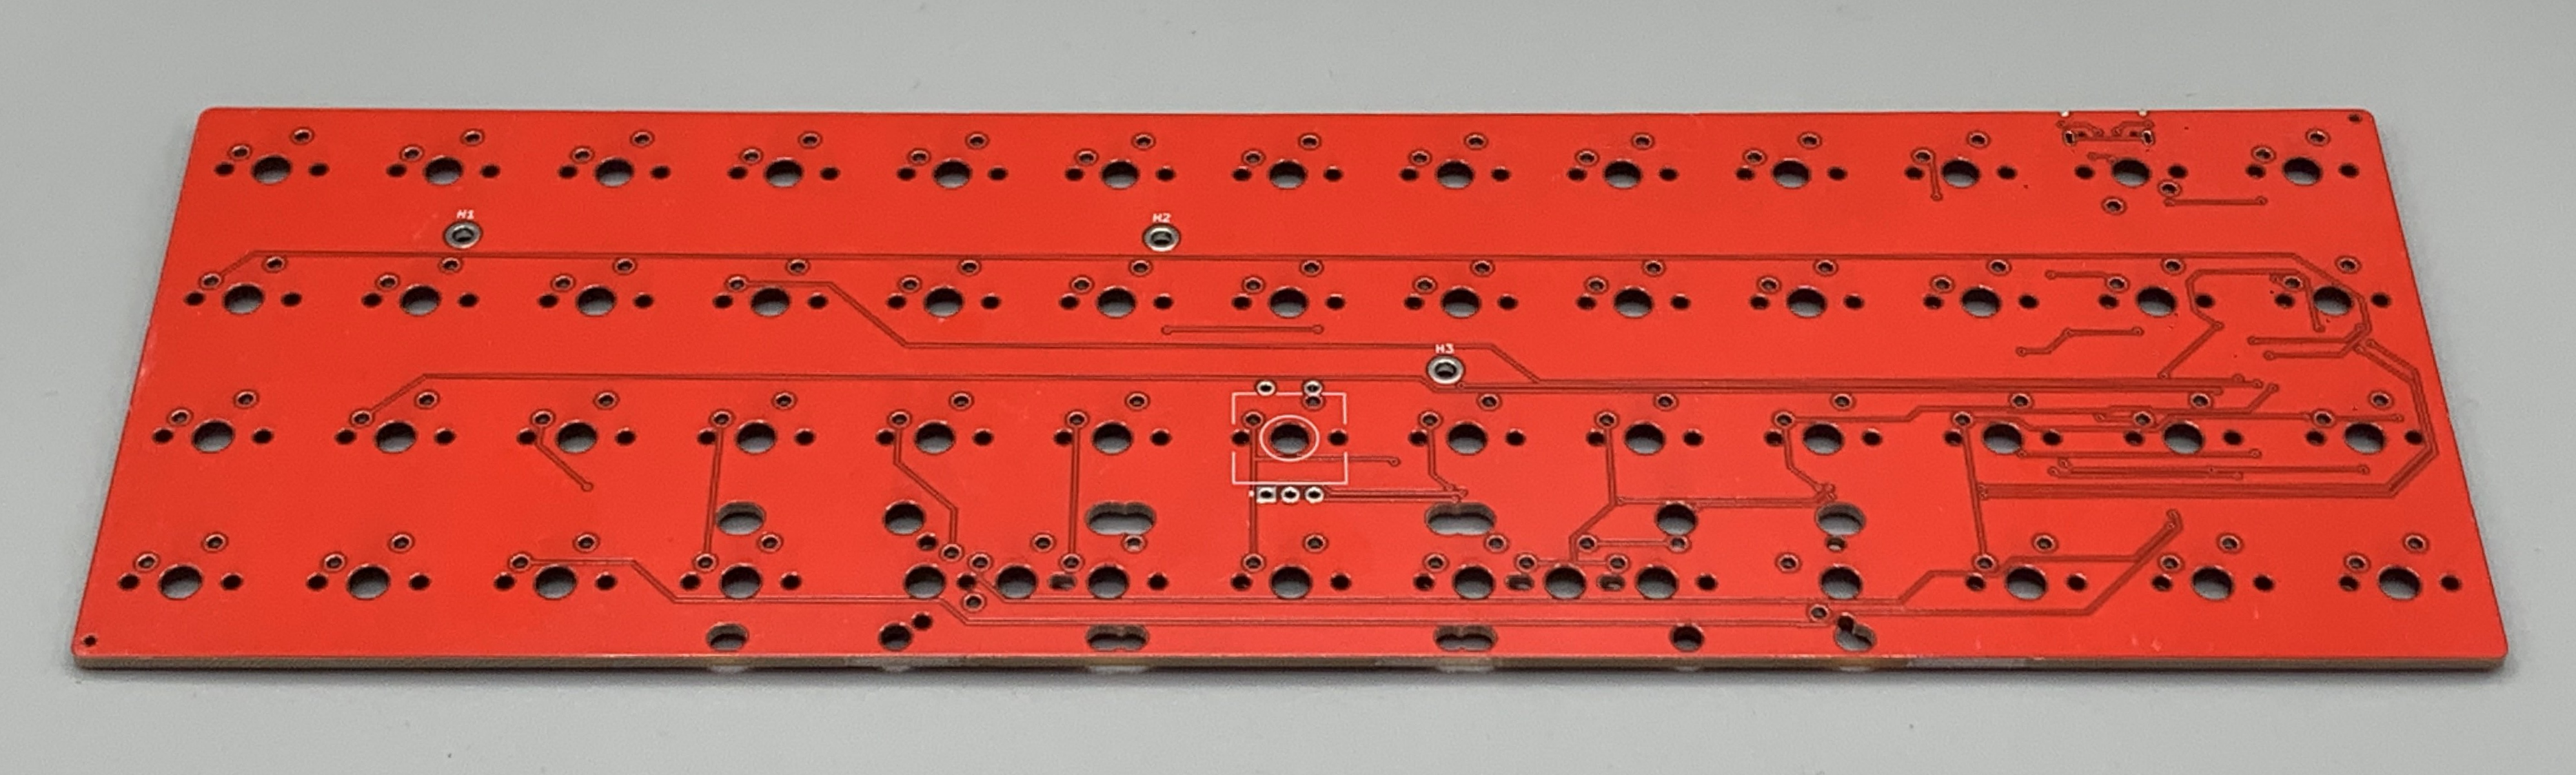 Front of a Minibaen v2 PCB